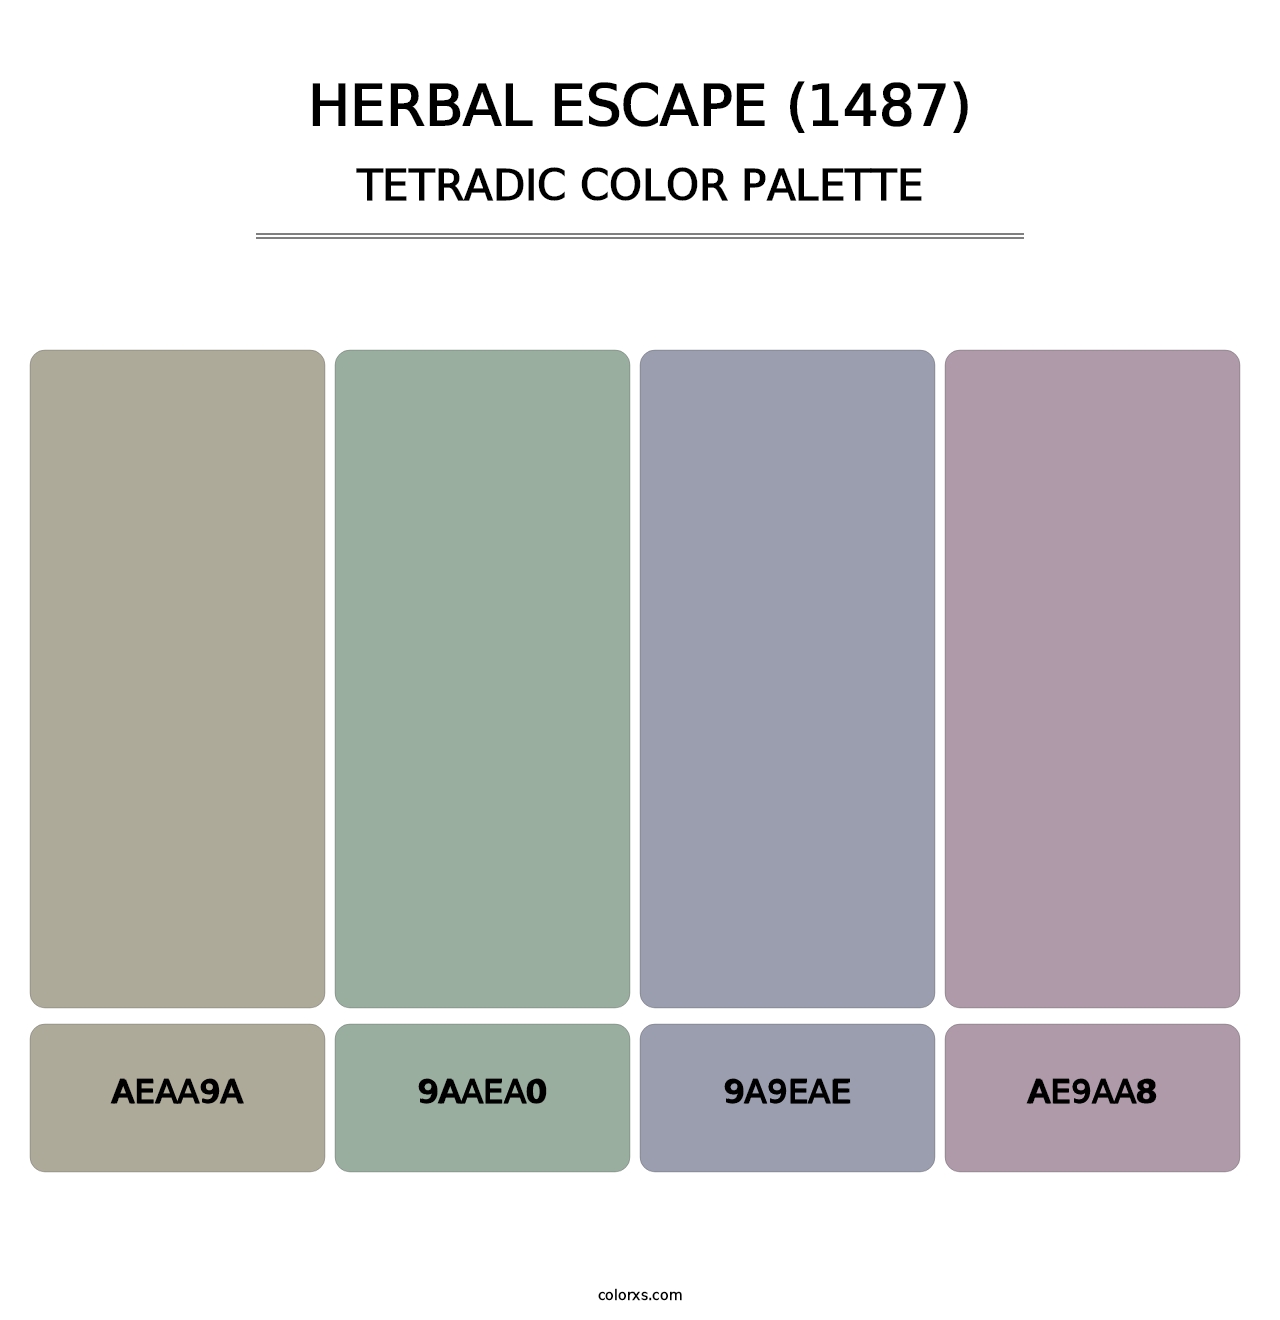 Herbal Escape (1487) - Tetradic Color Palette